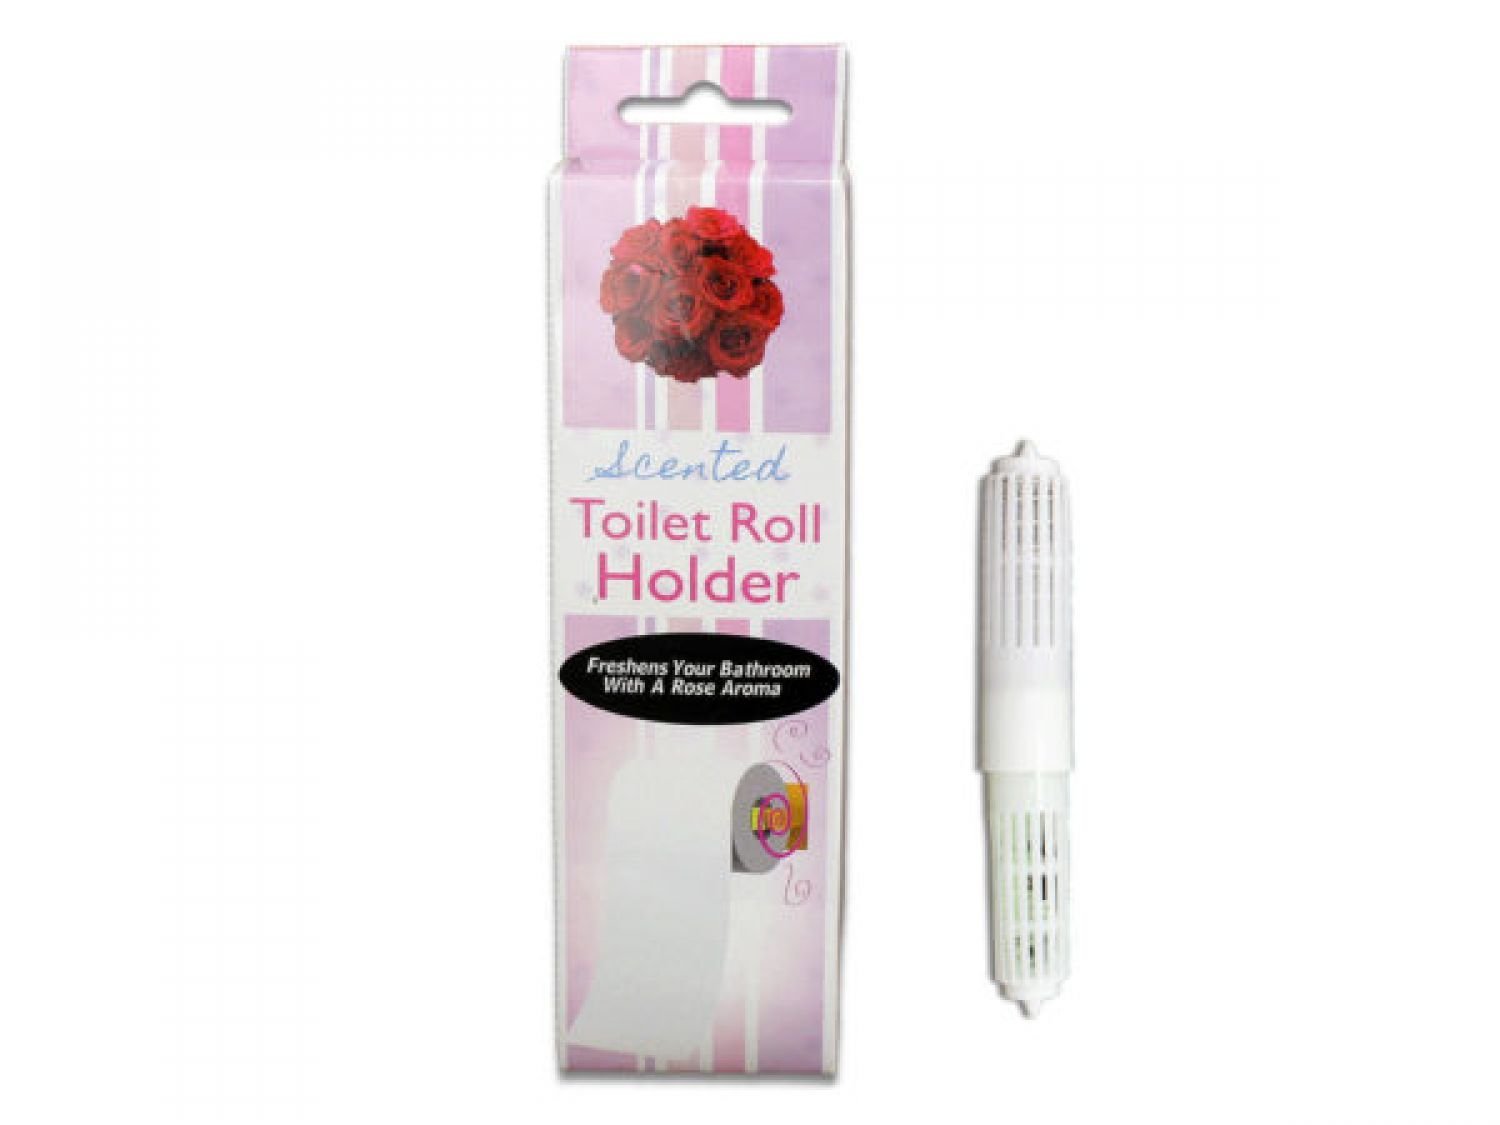 Rose Scented Toilet Roll Holder